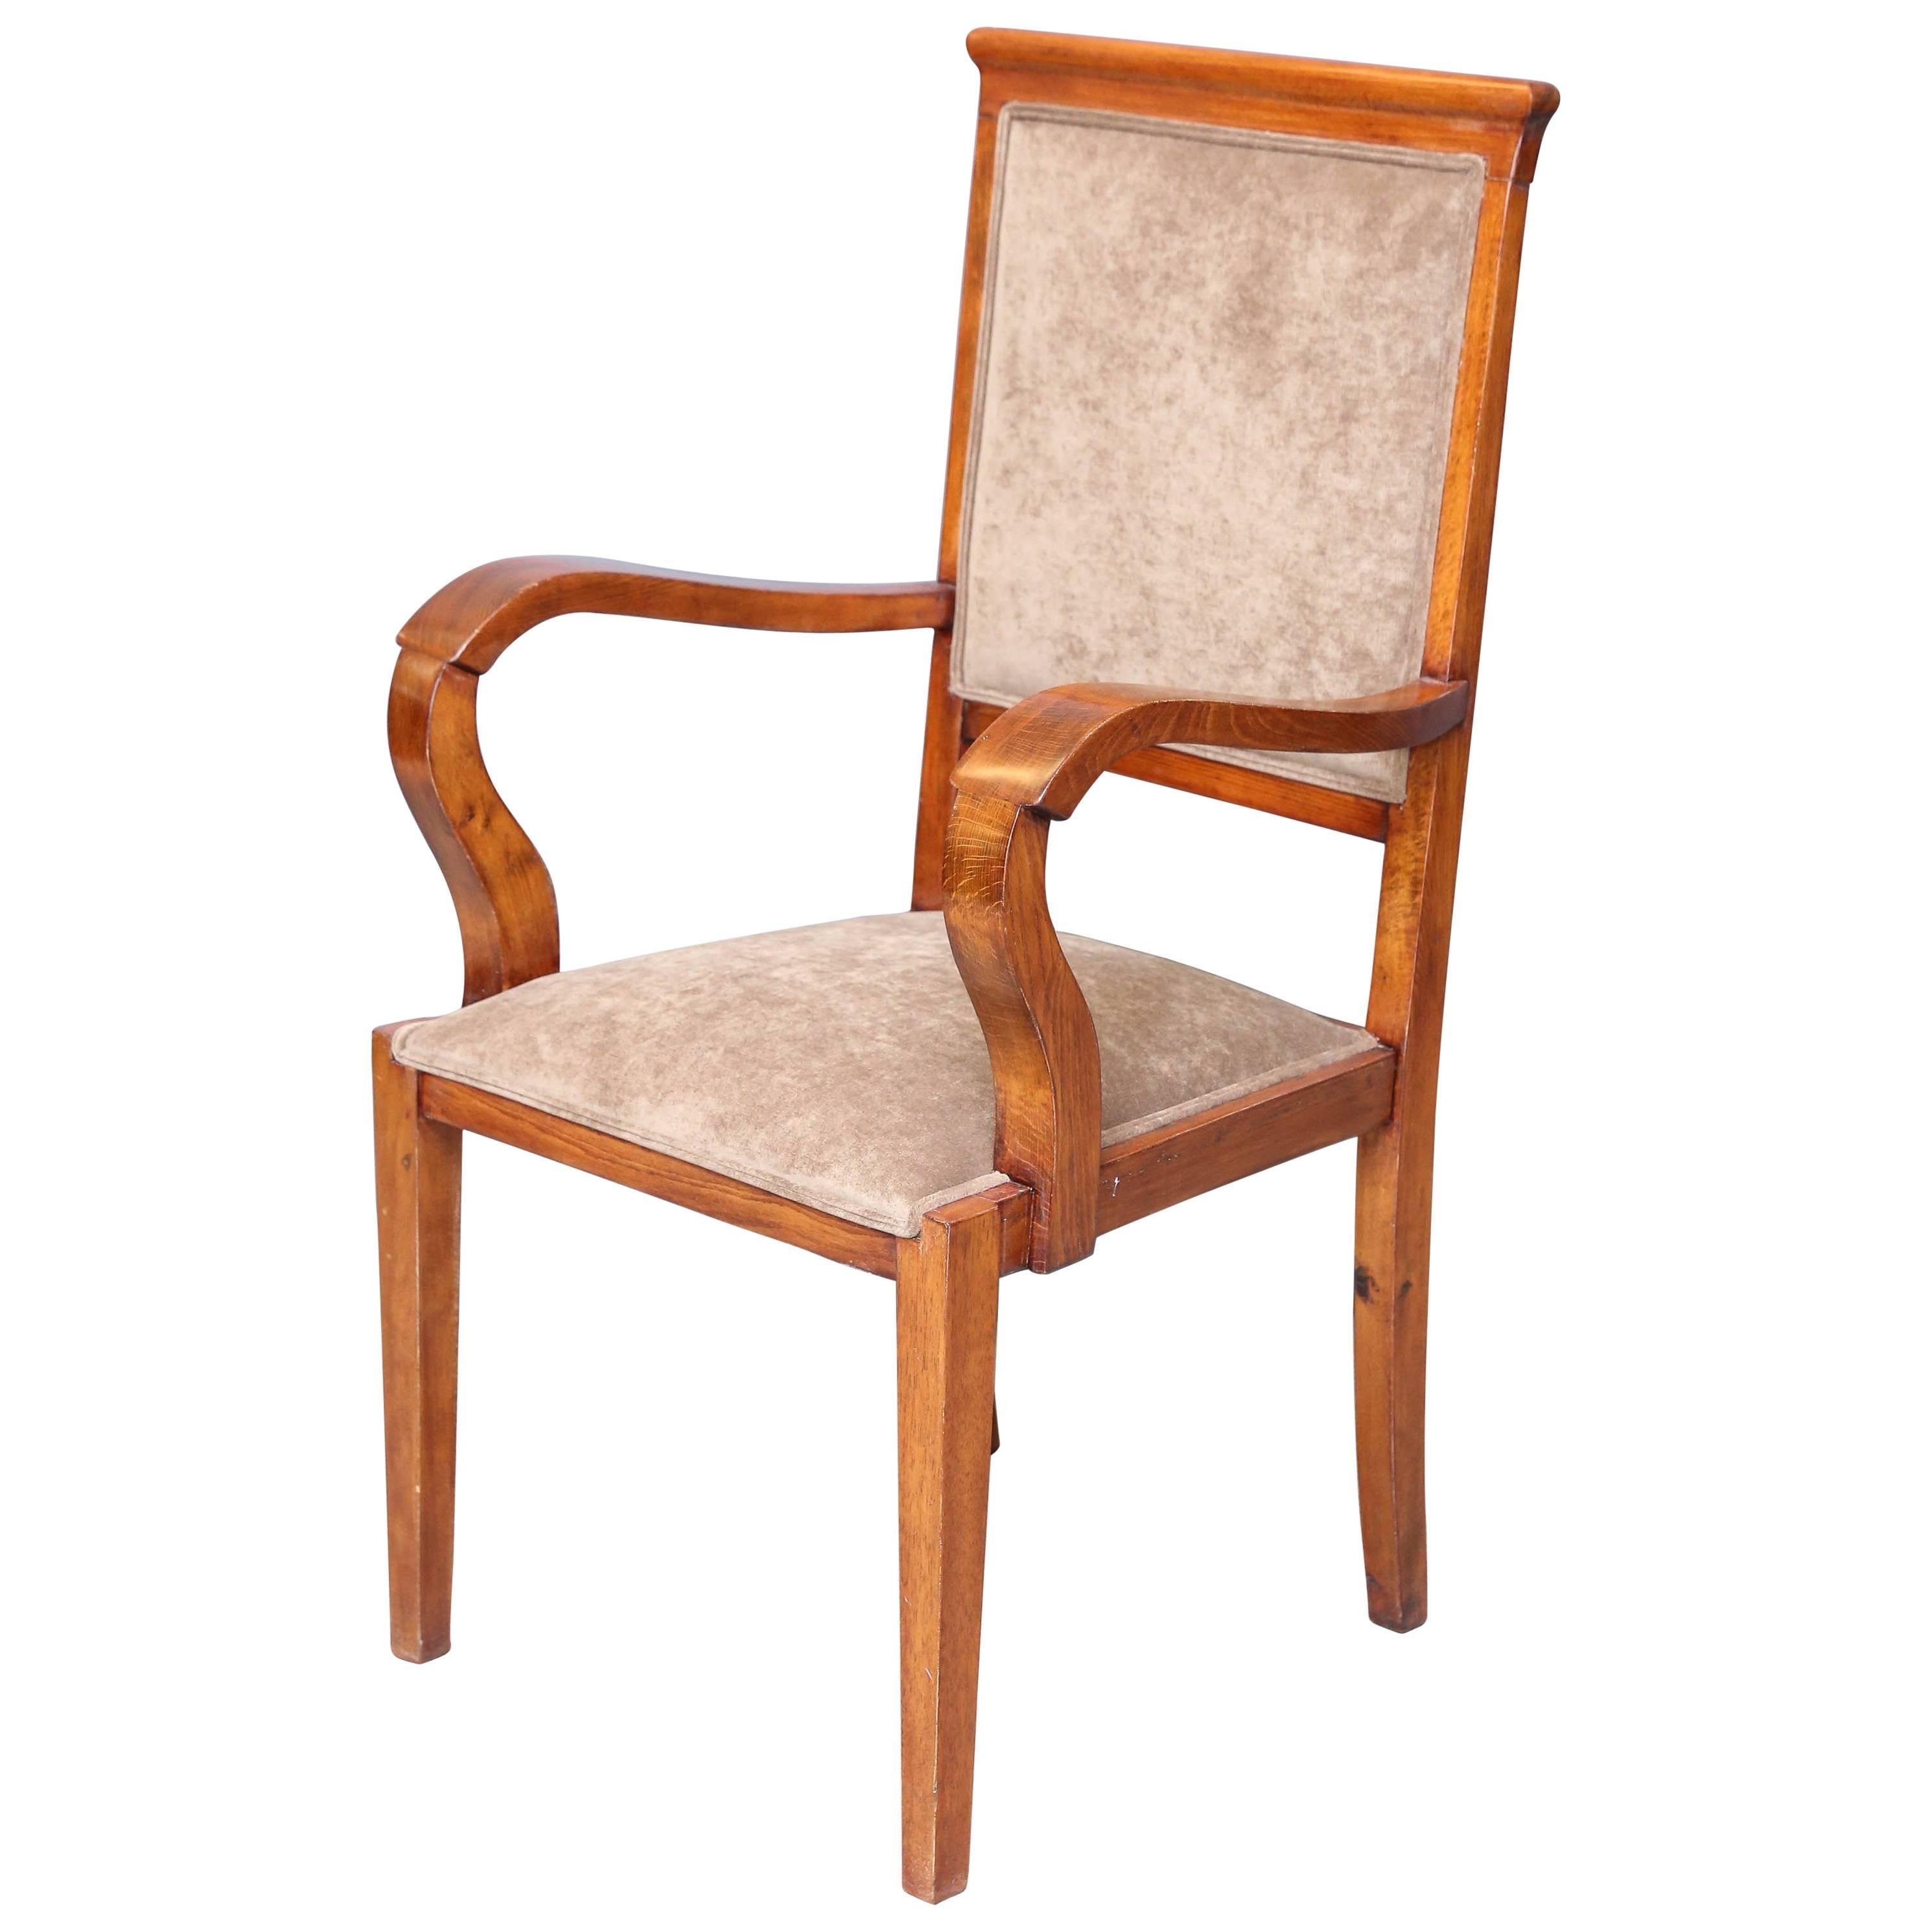 Hungarian Art Deco Chair in Walnut